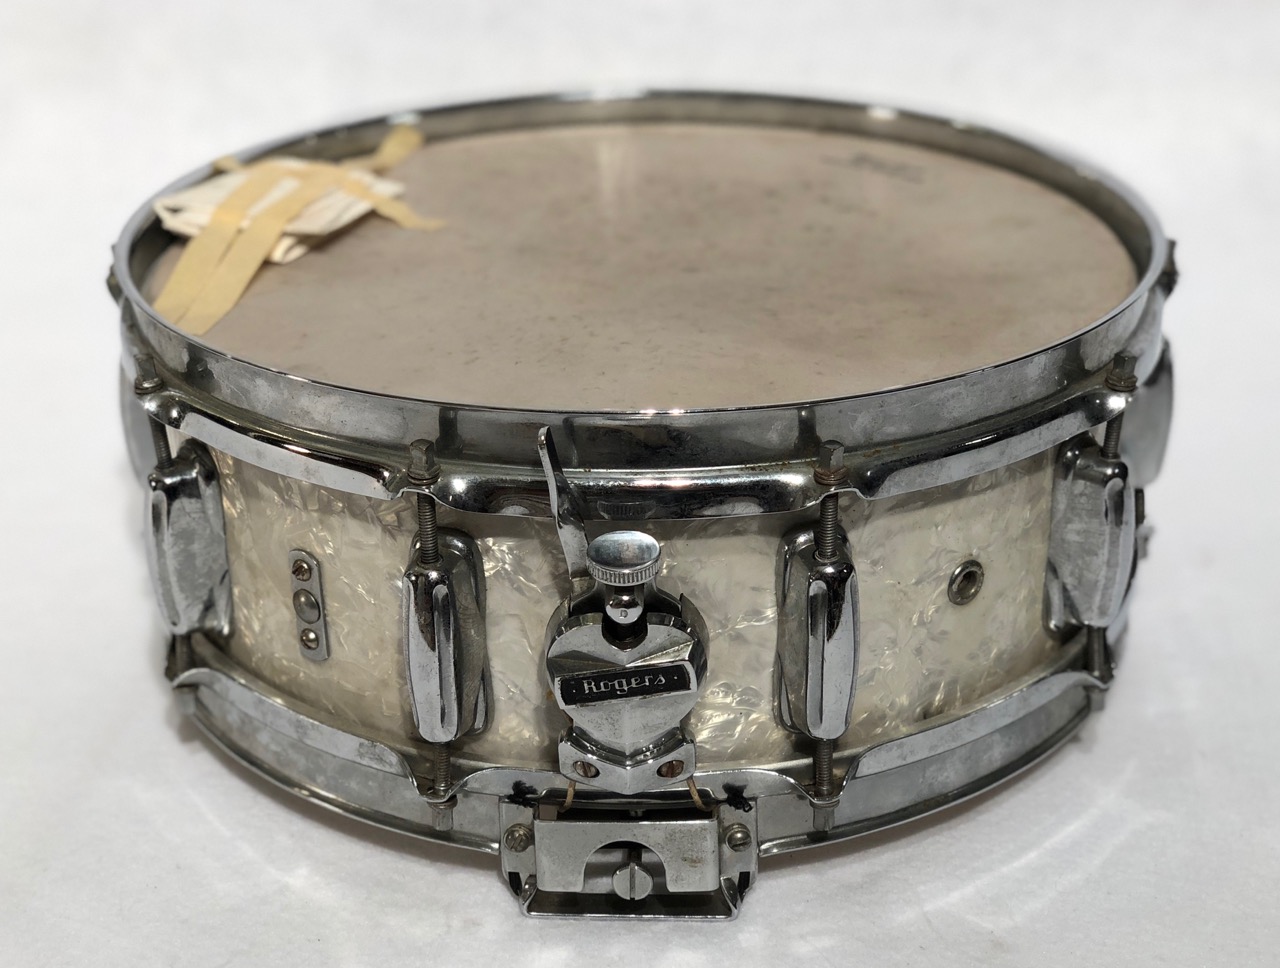 Gene Krupa's snare drum, Gene Krupa's Rogers Dyna-Sonic snare drum, Rogers drums, Slingerland drums, vintage drums, jazz collectibles